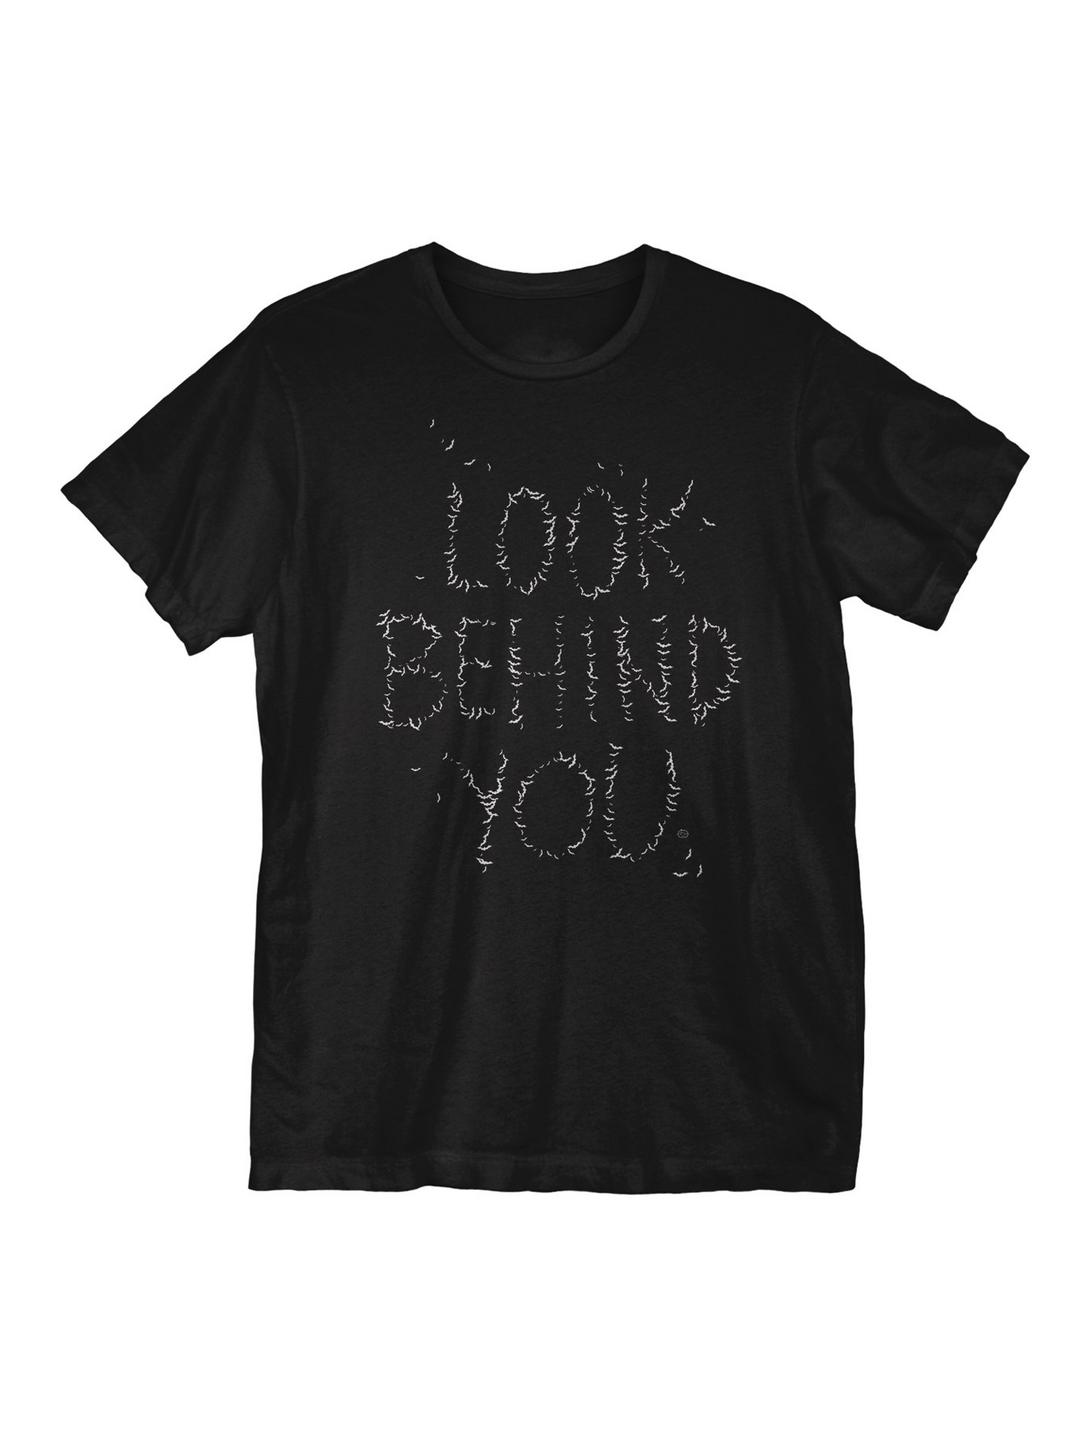 Look Behind You T-Shirt, BLACK, hi-res